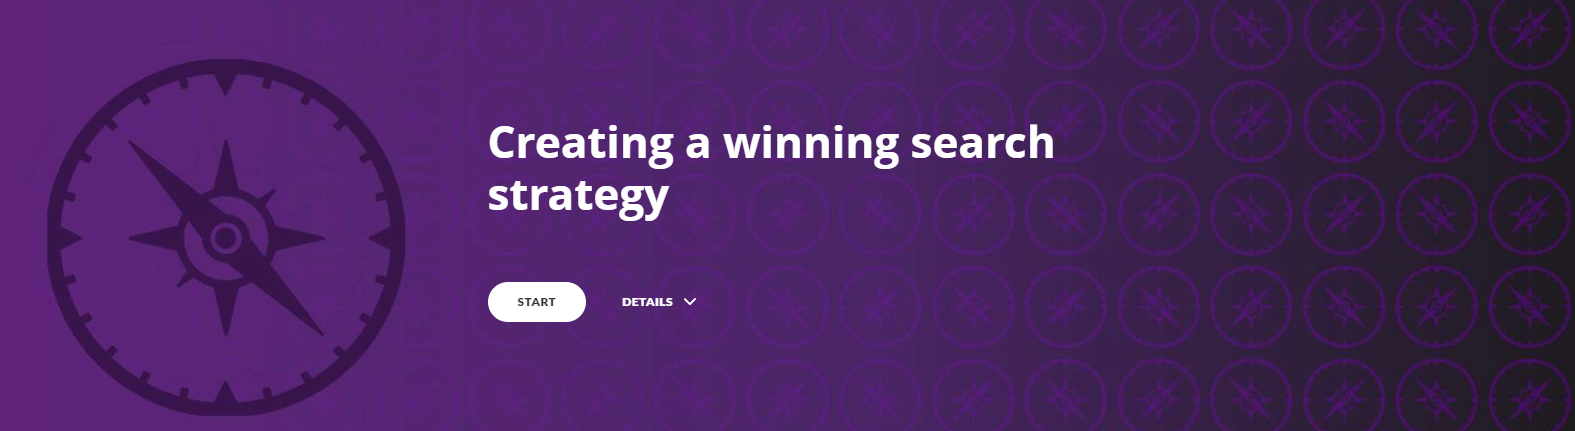 Create a winning search strategy